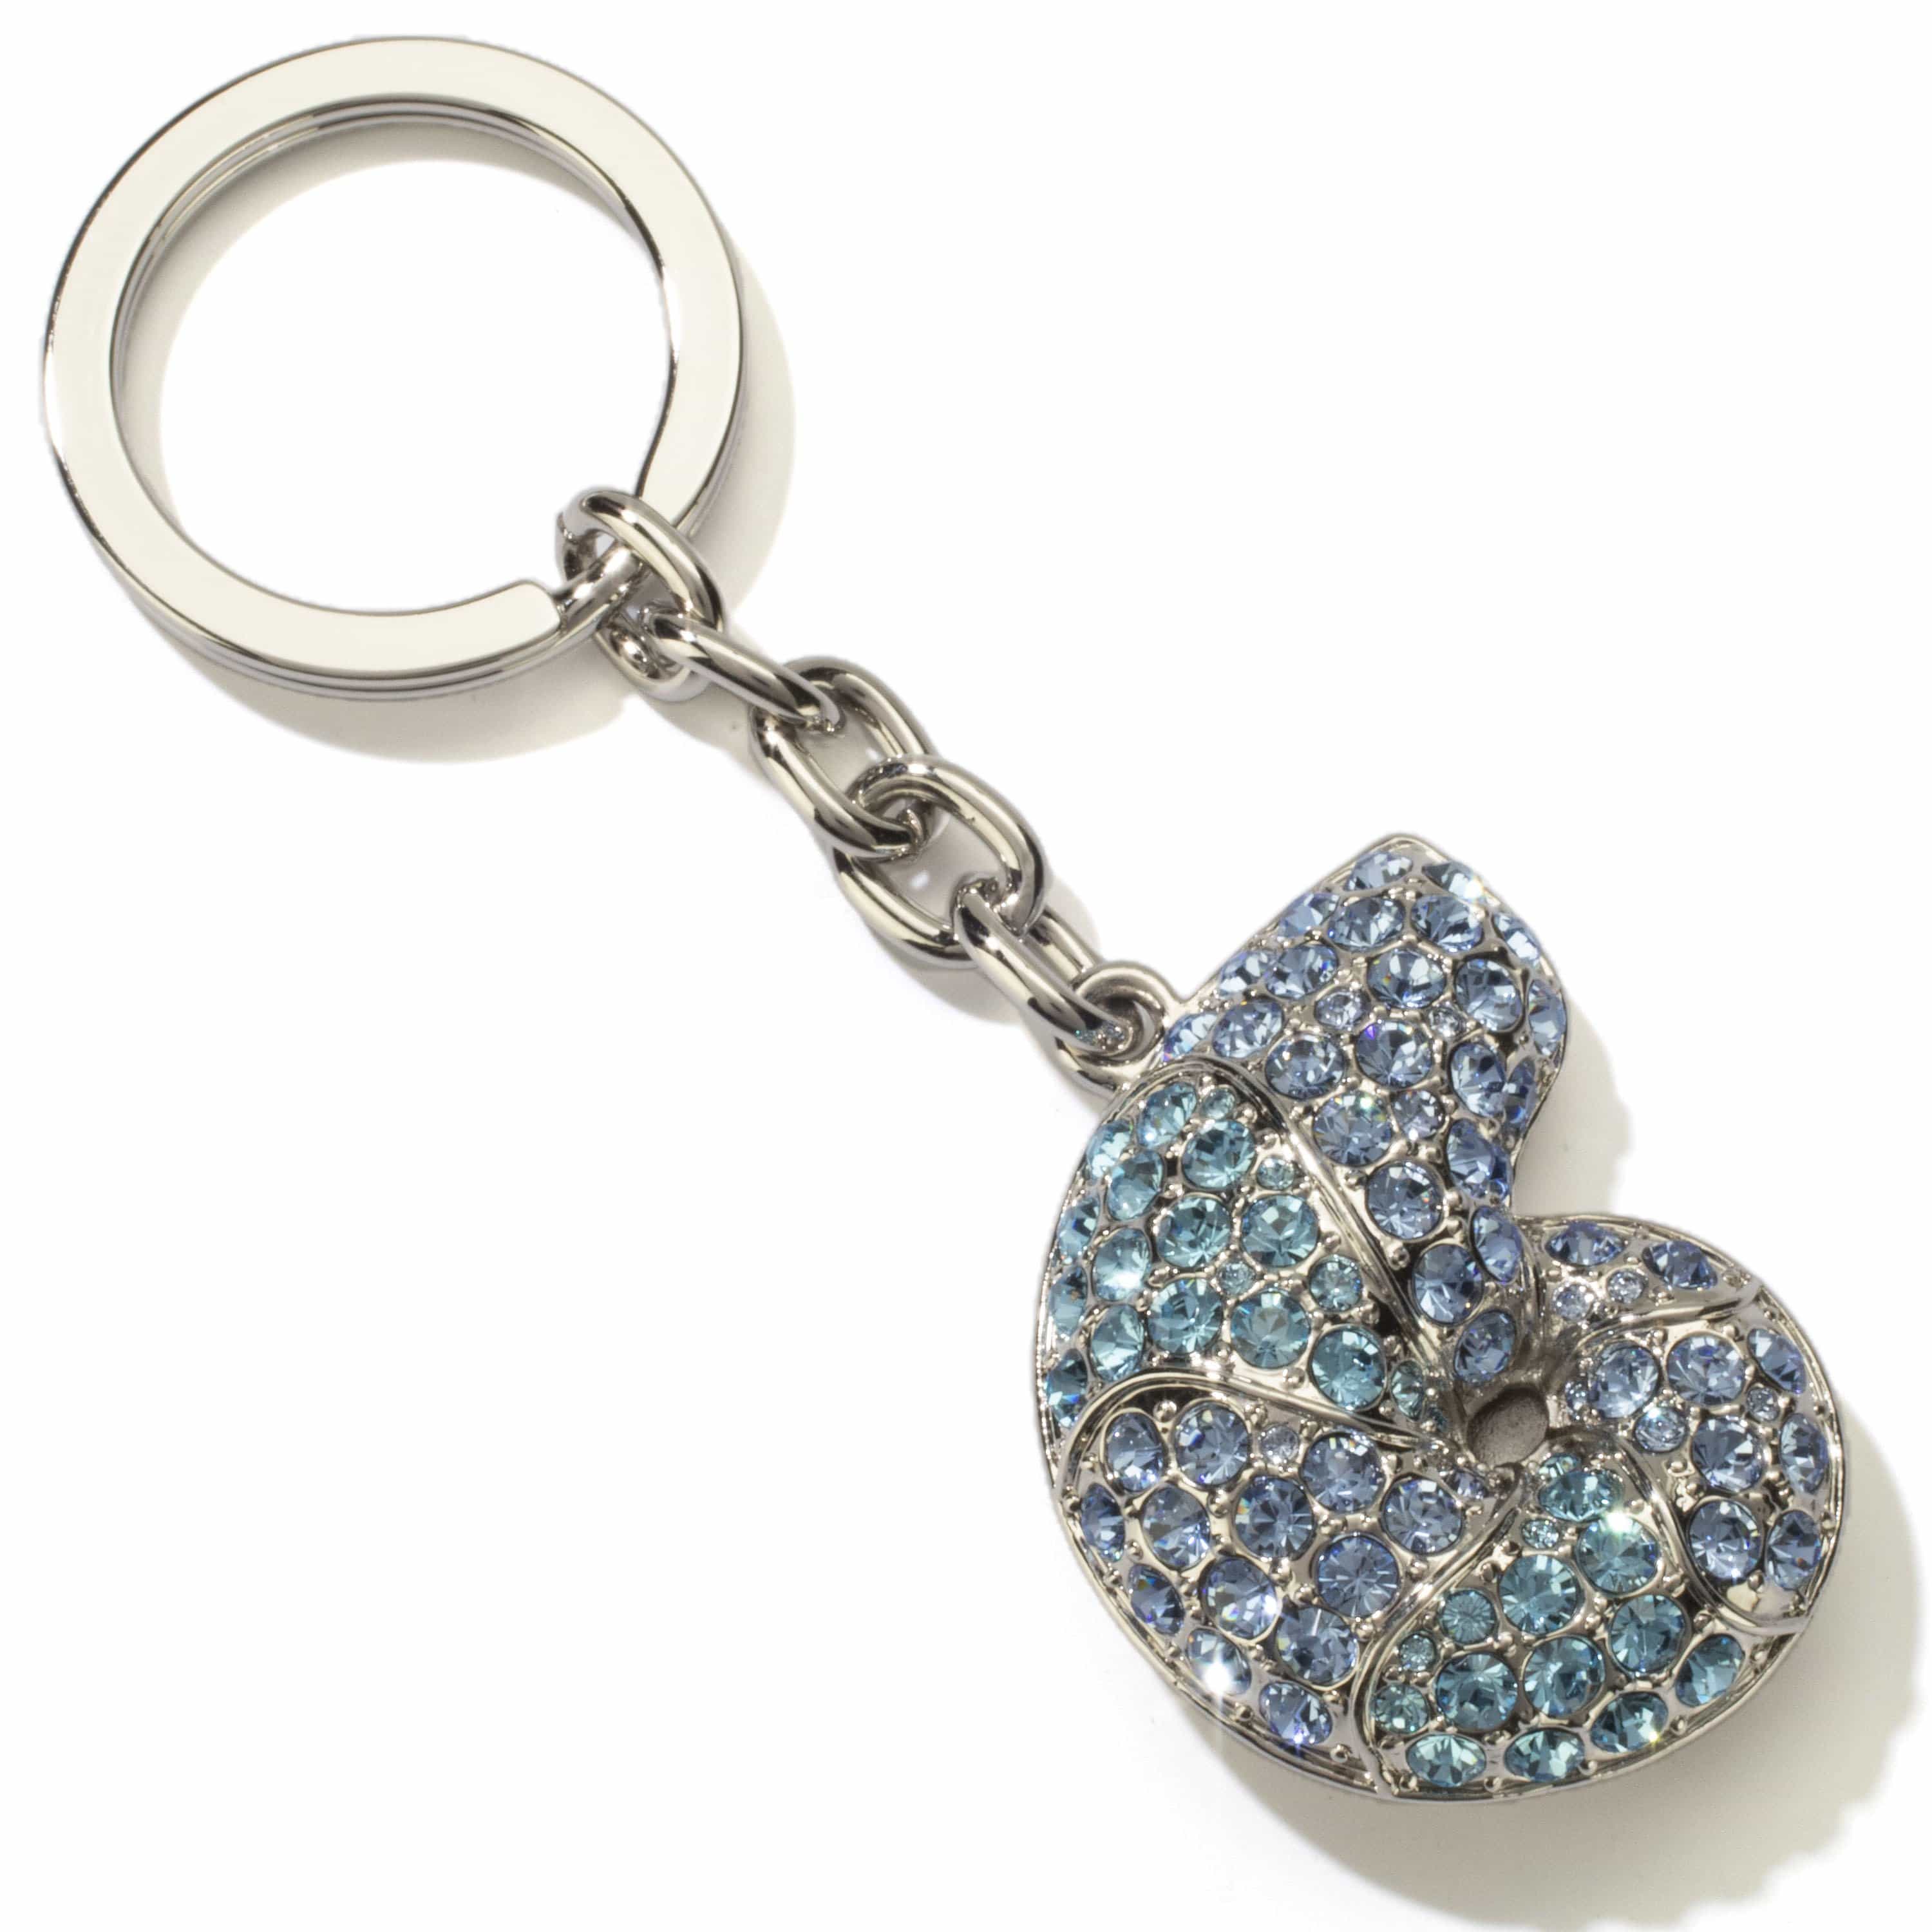 Kalifano Crystal Keychains Sapphire Seashell Keychain made with Swarovski Crystals SKC-128